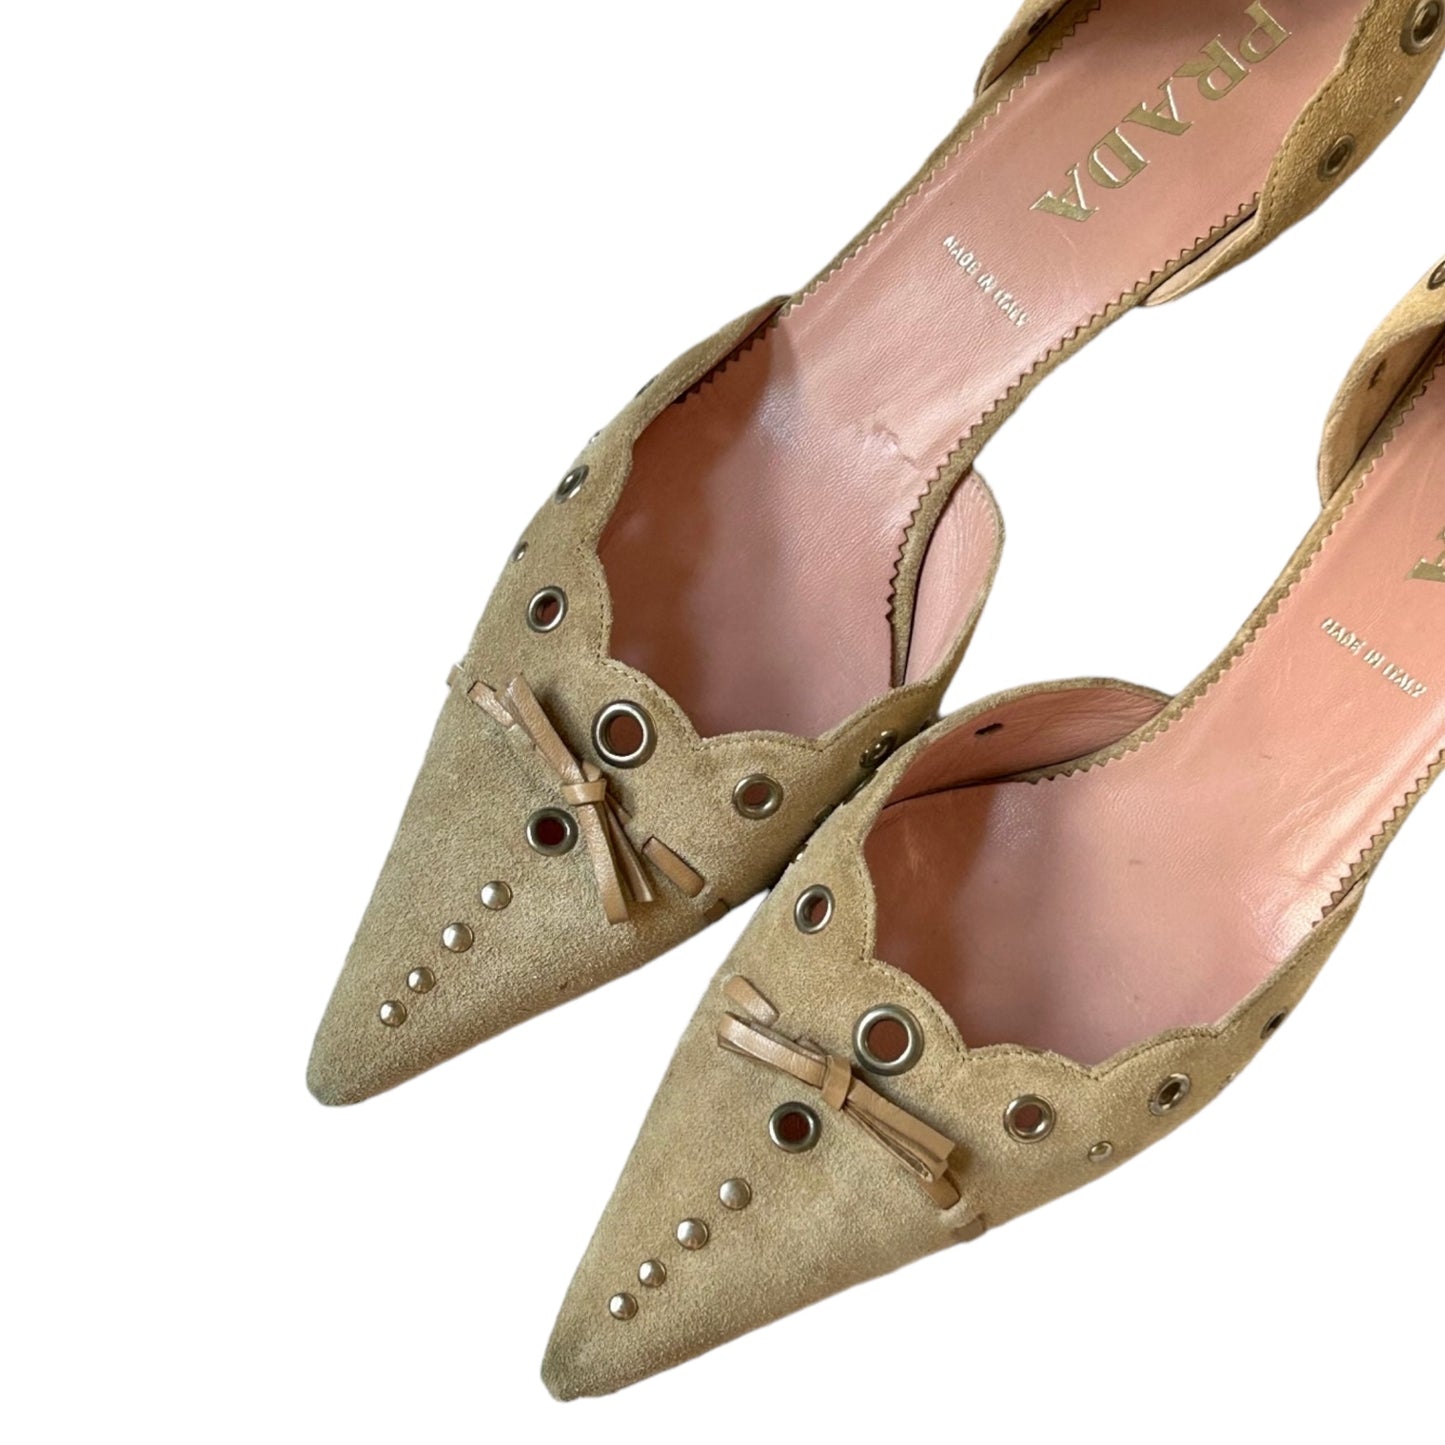 Vintage Prada beige suede kitten heels